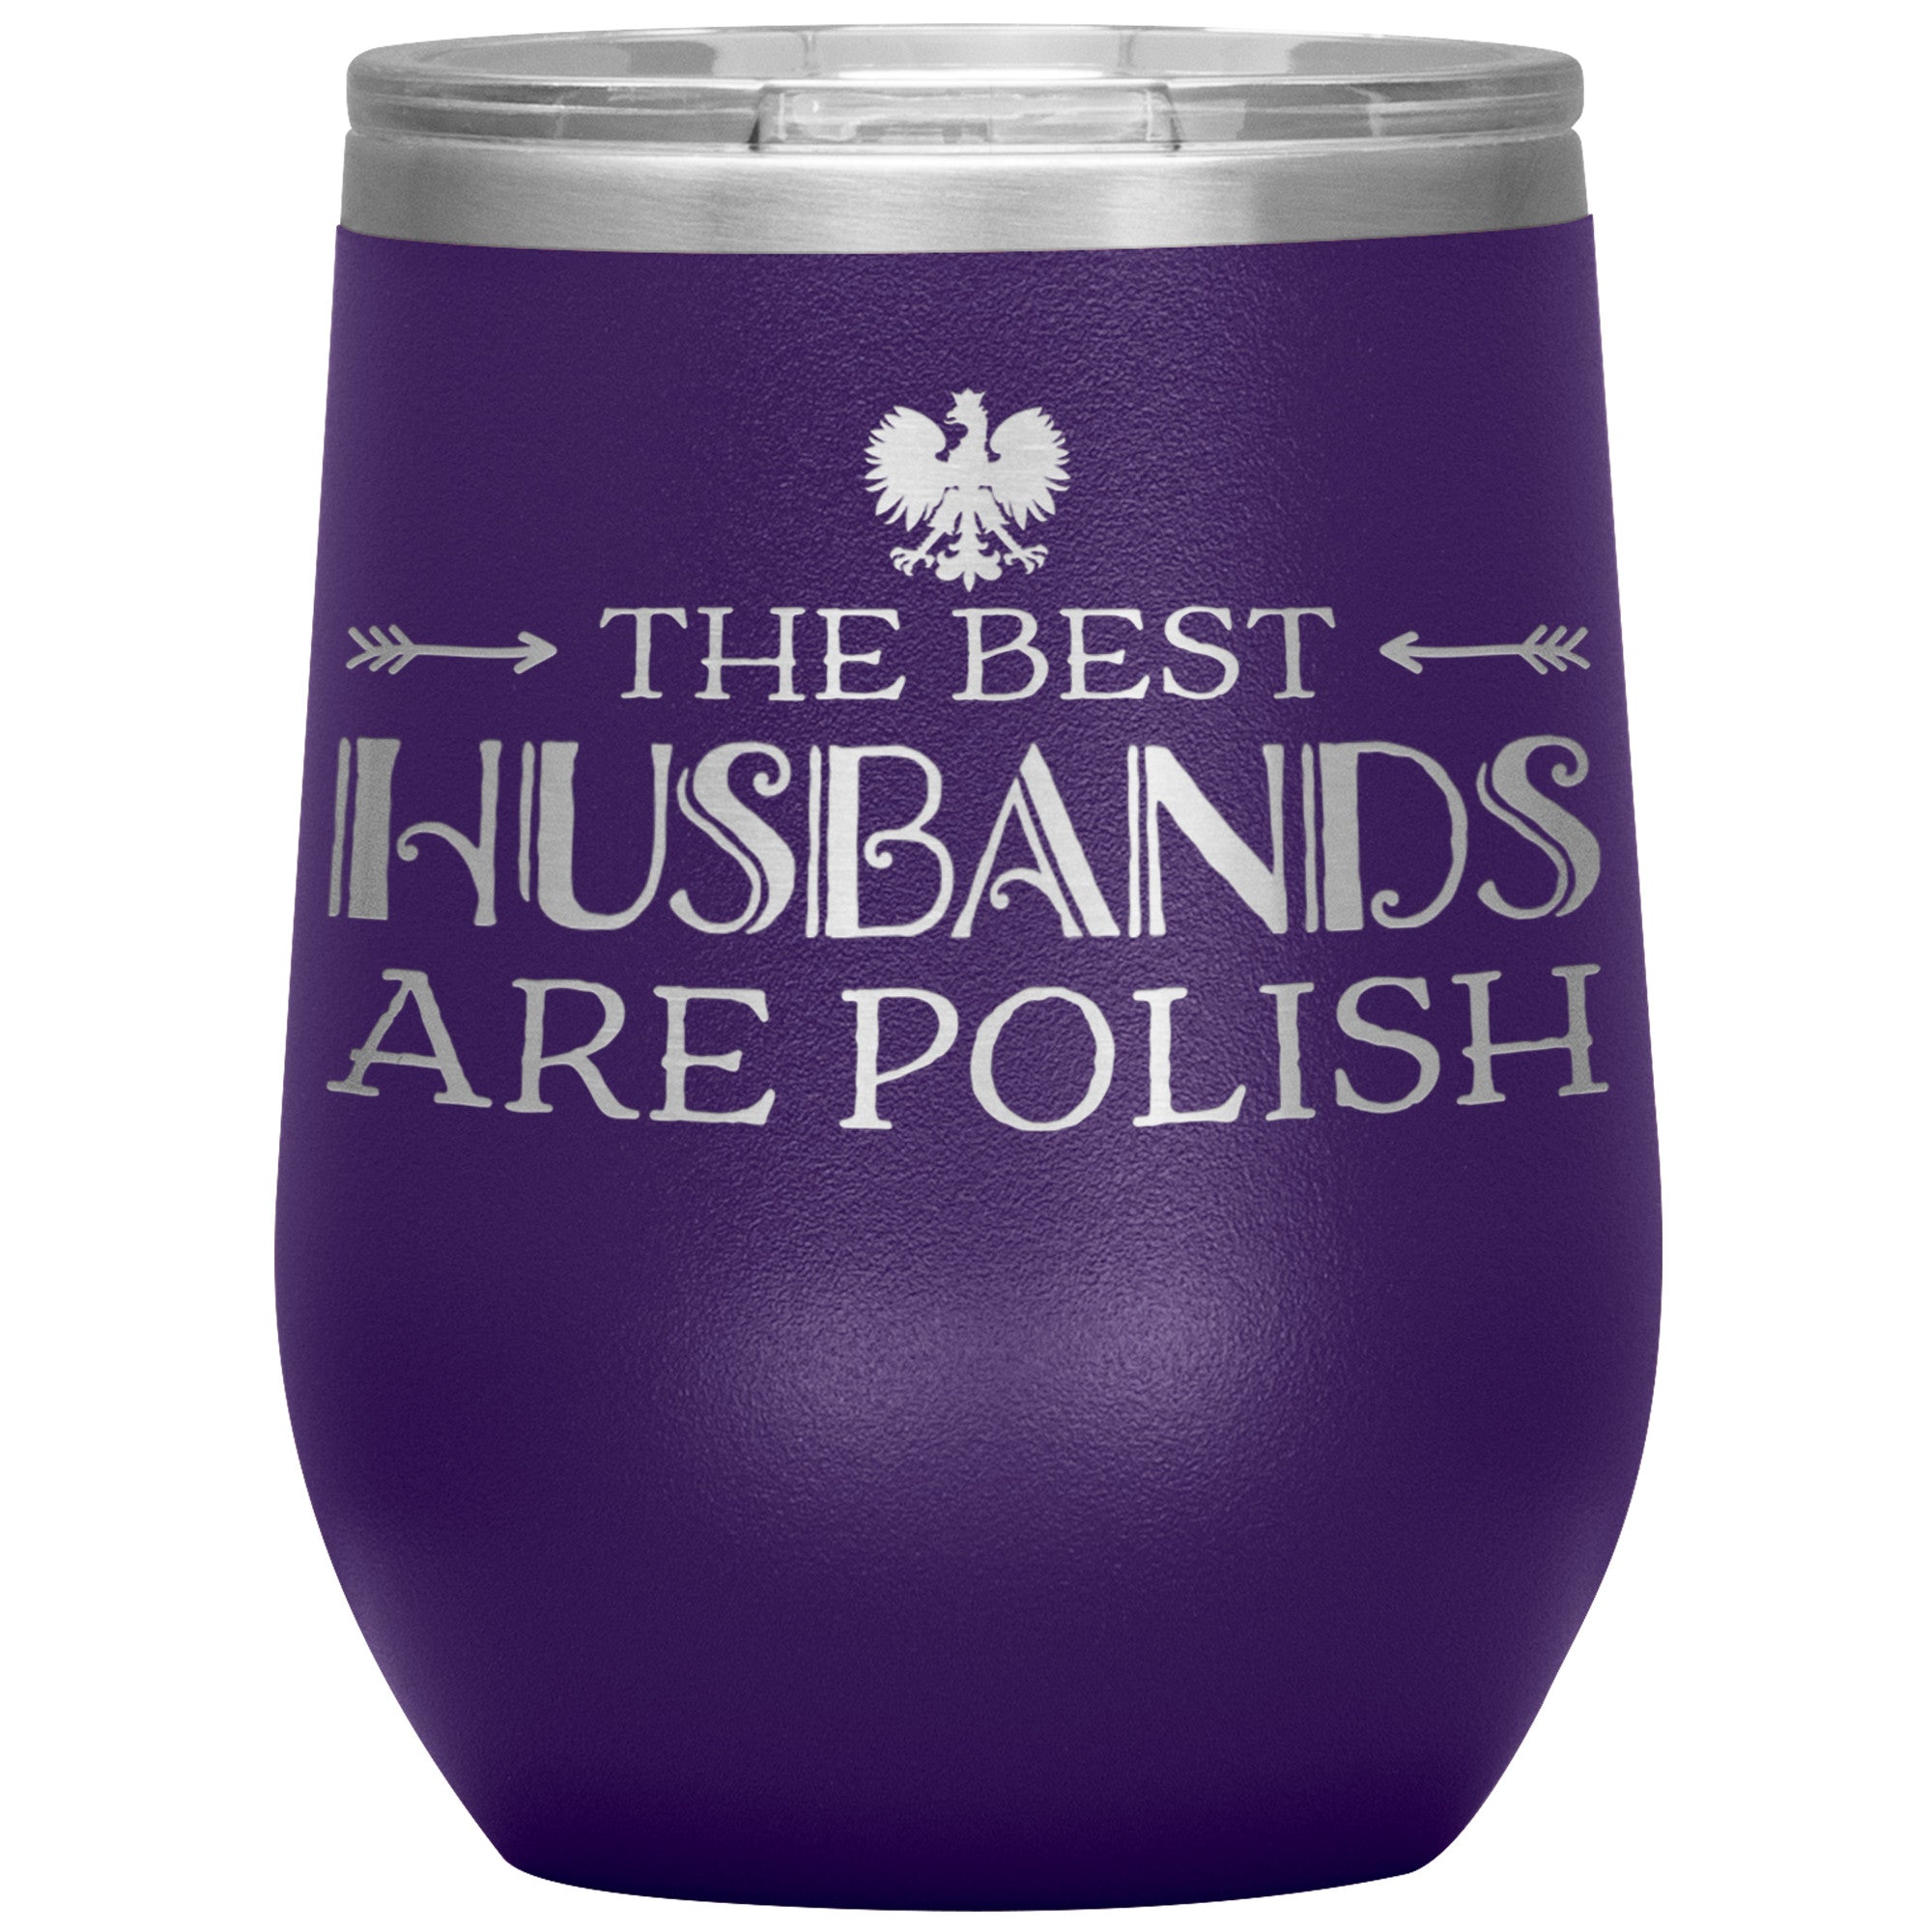 The Best Husbands Are Polish Insulated Wine Tumbler Tumblers teelaunch Purple  